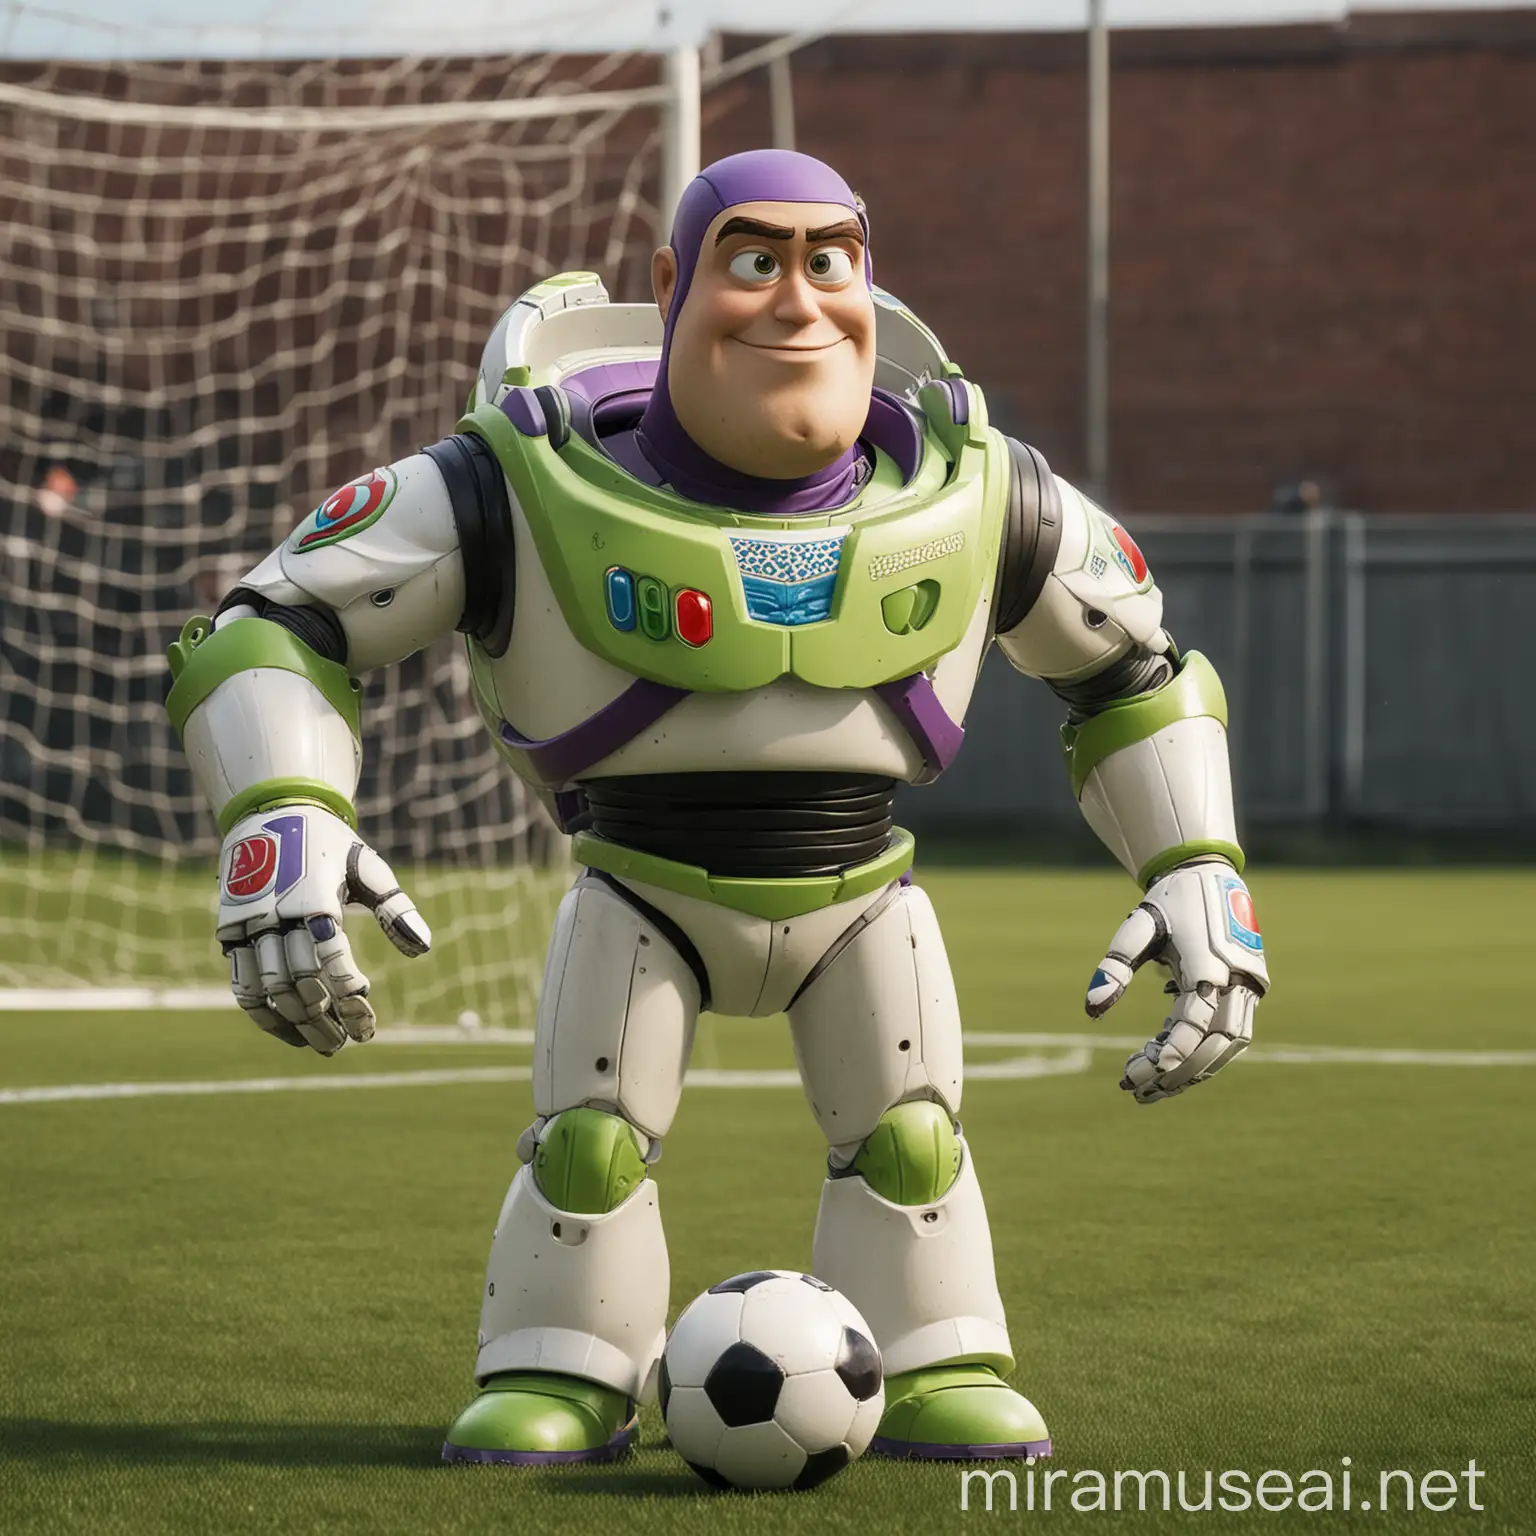 Buzz Lightyear Playing 11ASide Football